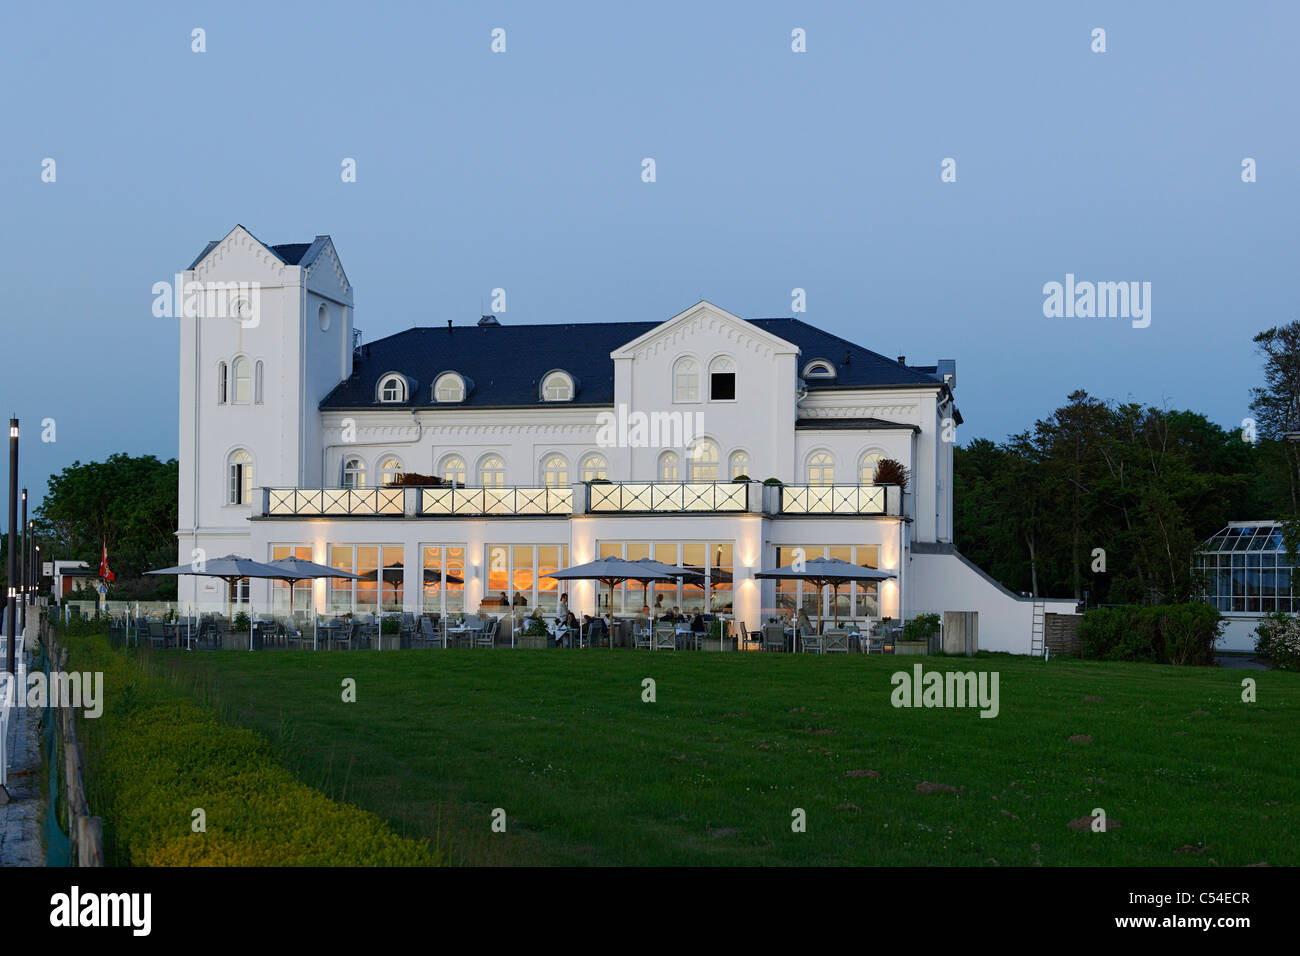 Restaurante medinis fotografías e imágenes de alta resolución - Alamy